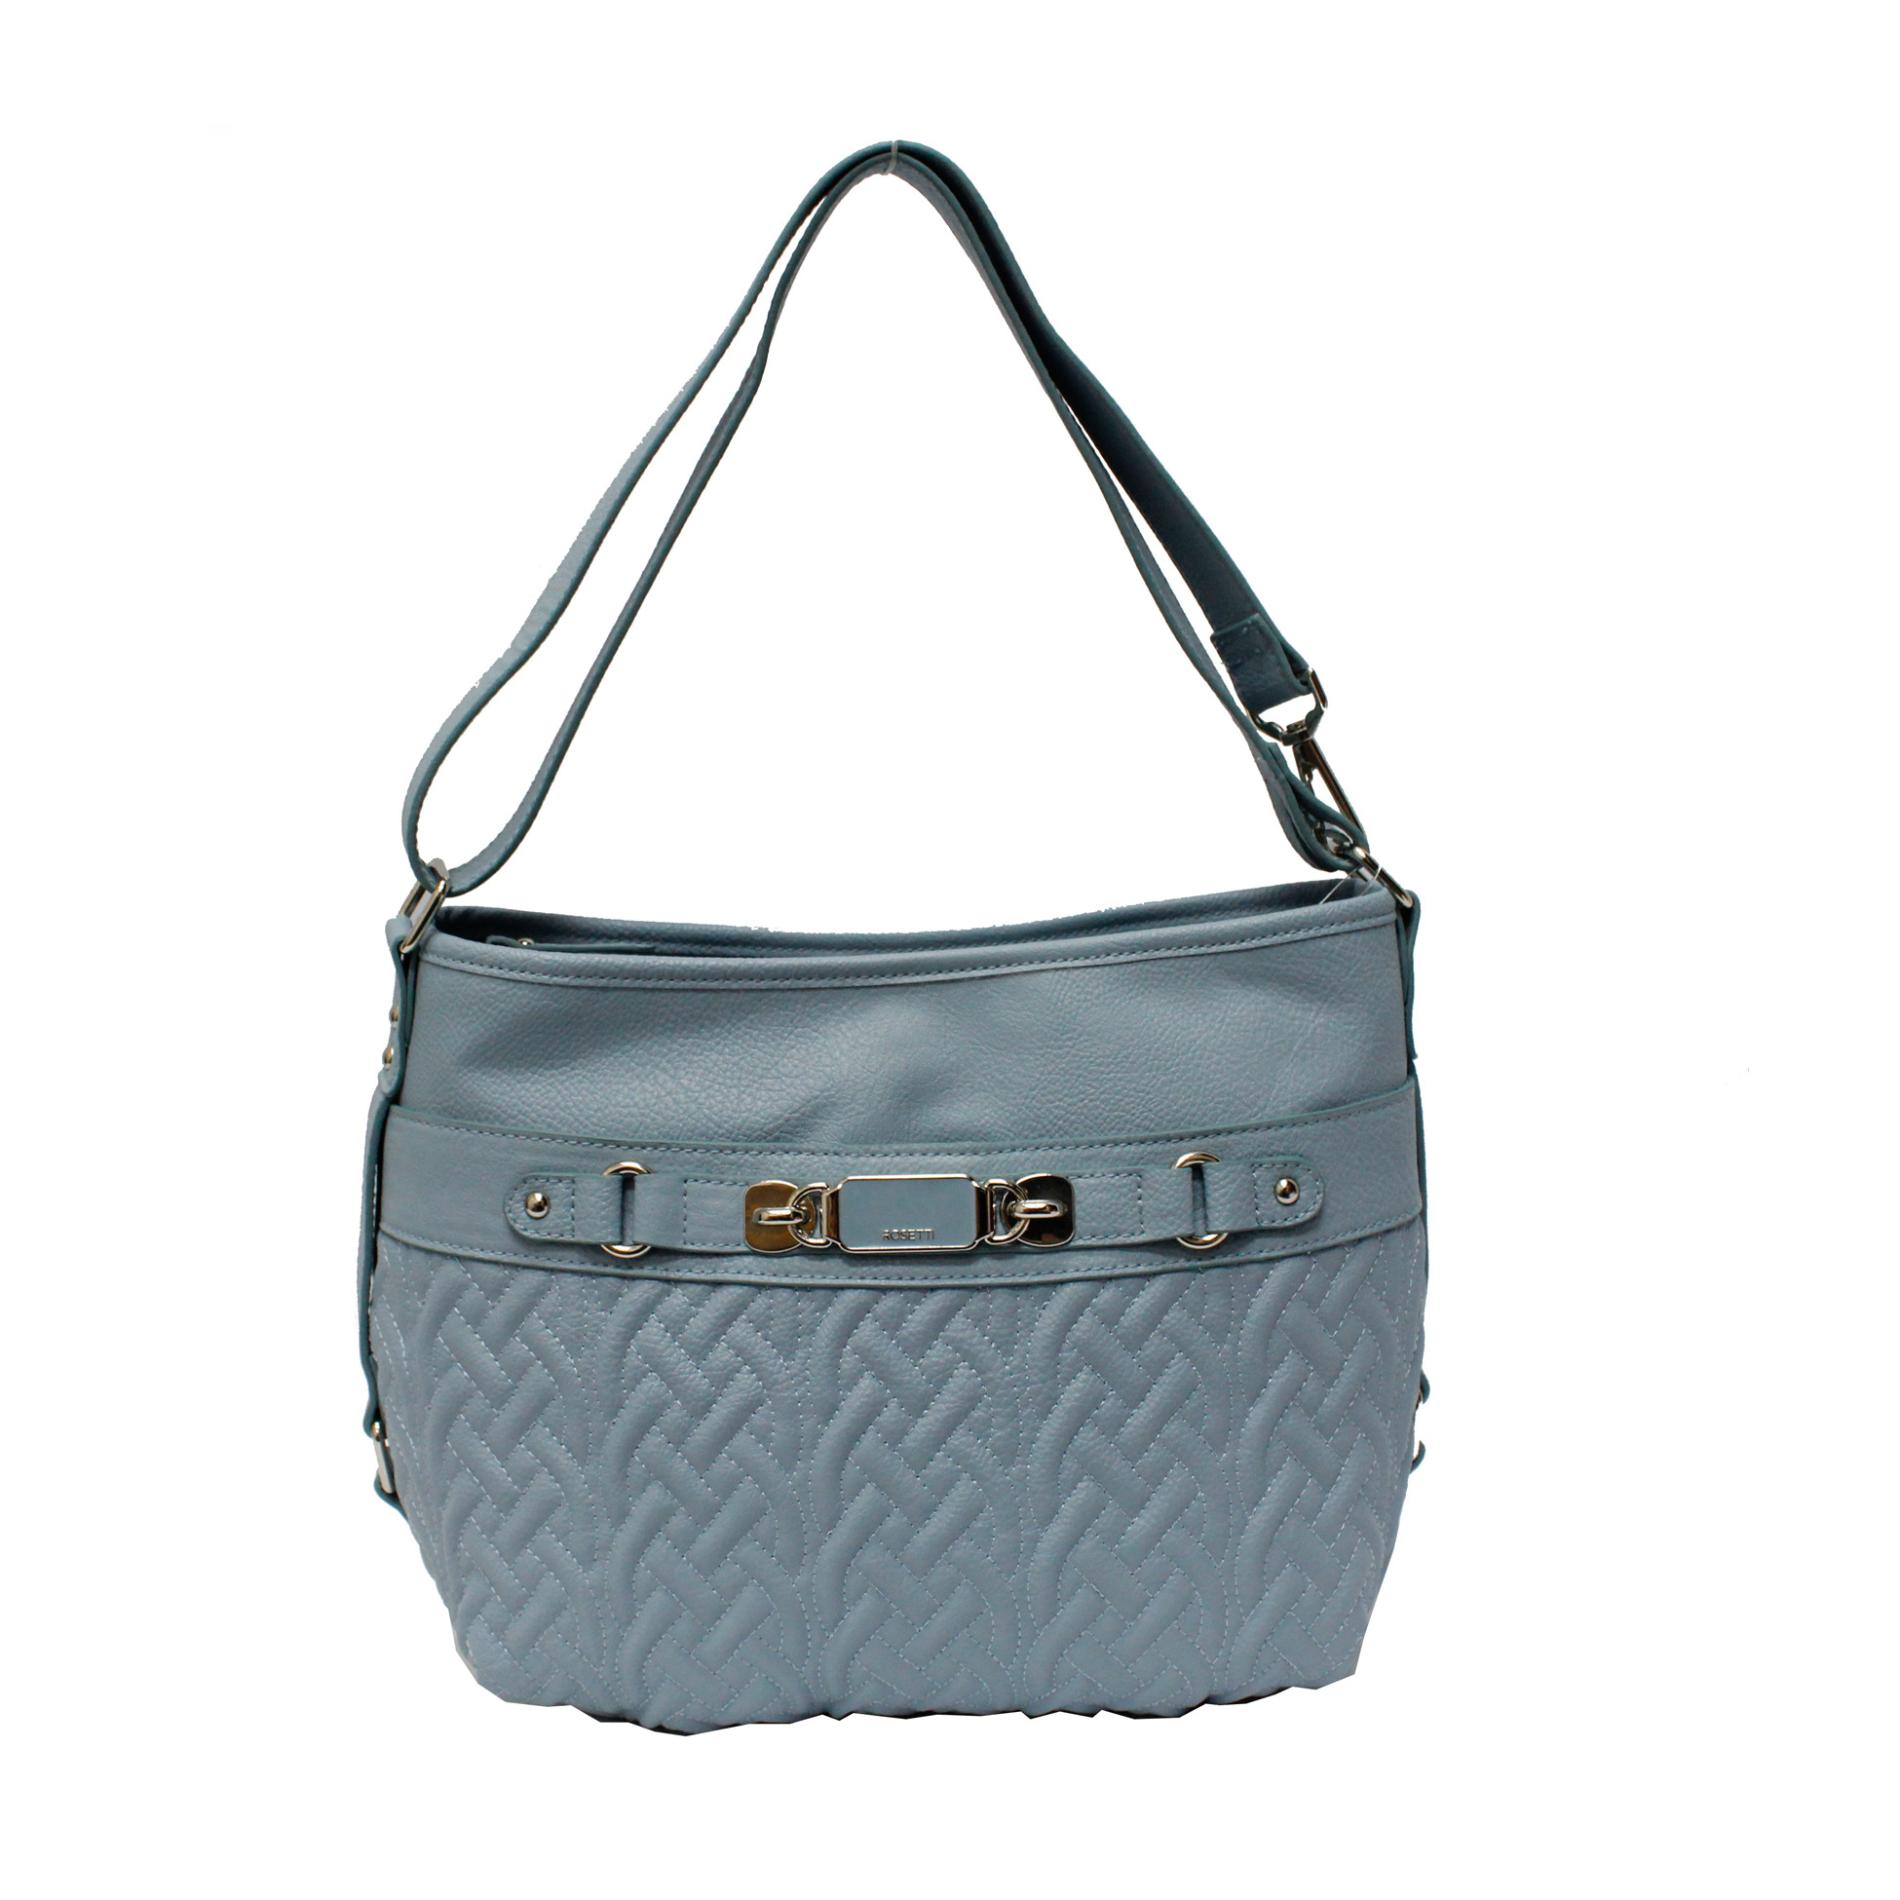 Rosetti Women's Convertible Satchel Handbag